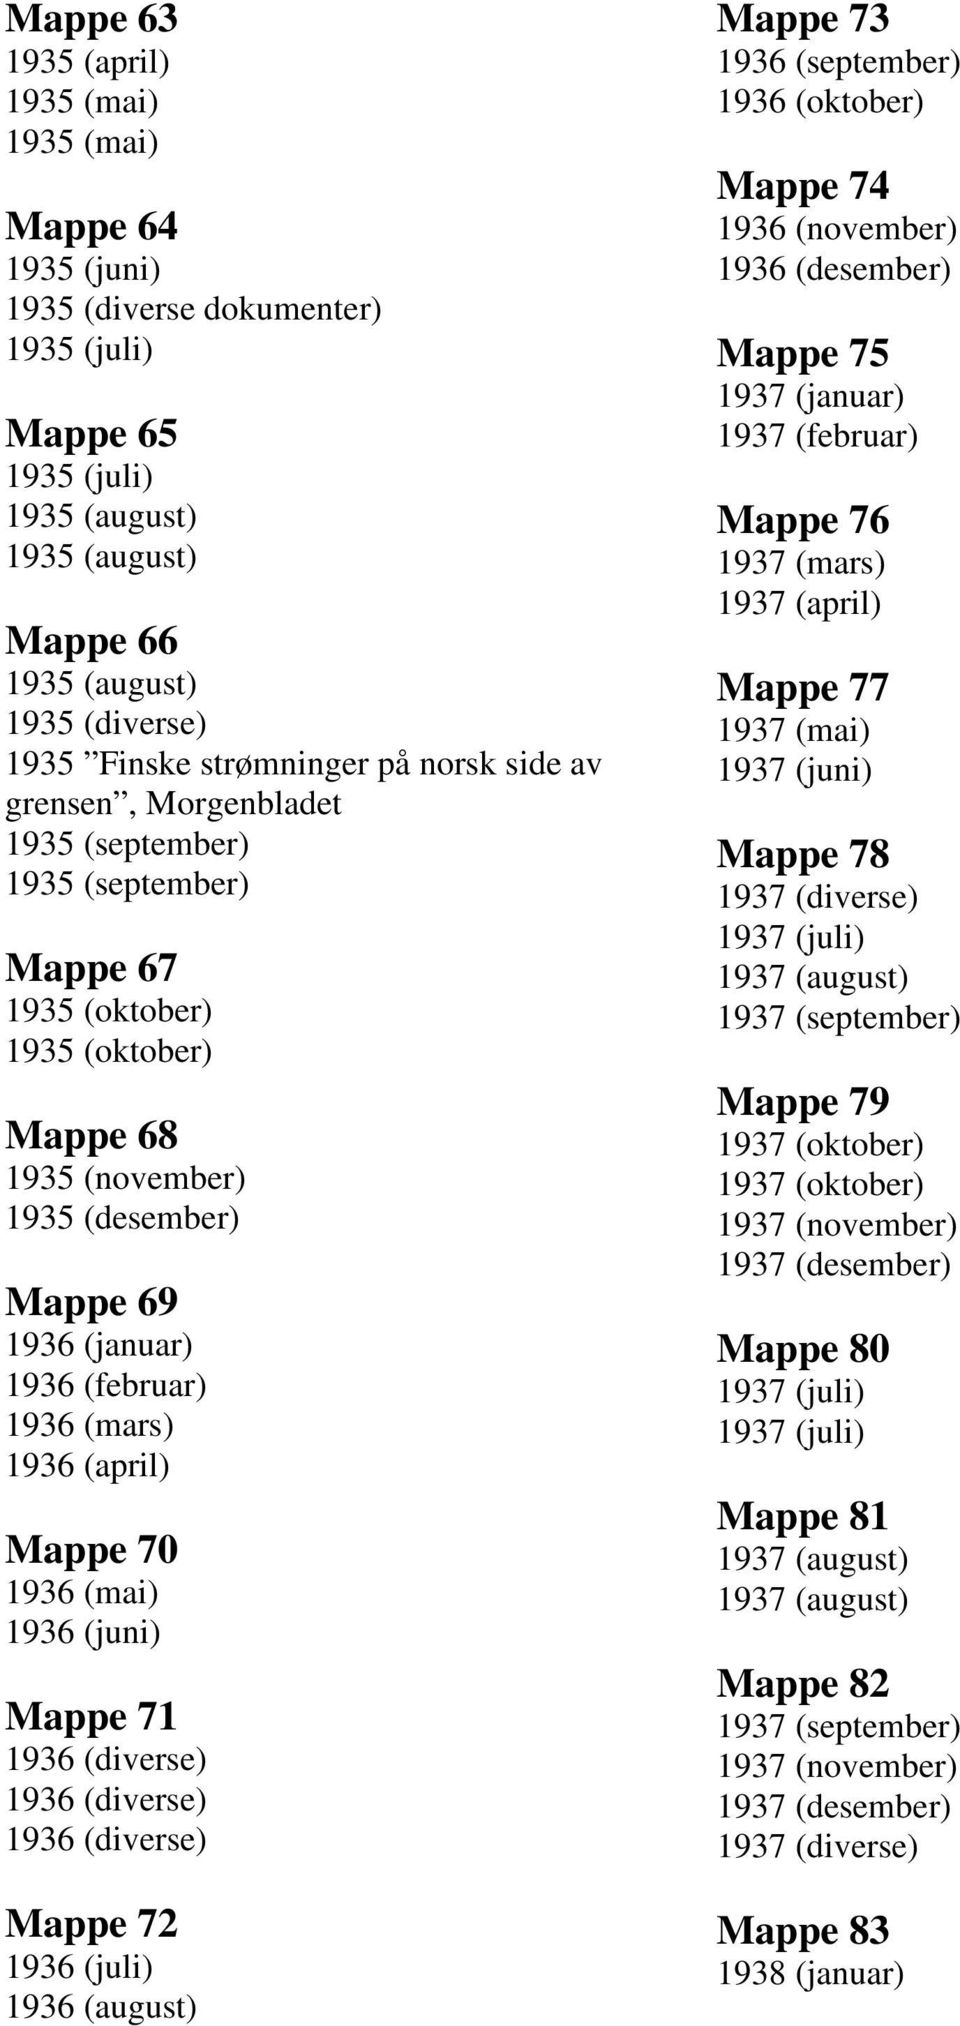 (februar) 1936 (mars) 1936 (april) Mappe 70 1936 (mai) 1936 (juni) Mappe 71 1936 (diverse) 1936 (diverse) 1936 (diverse) Mappe 72 1936 (juli) 1936 (august) Mappe 73 1936 (september) 1936 (oktober)